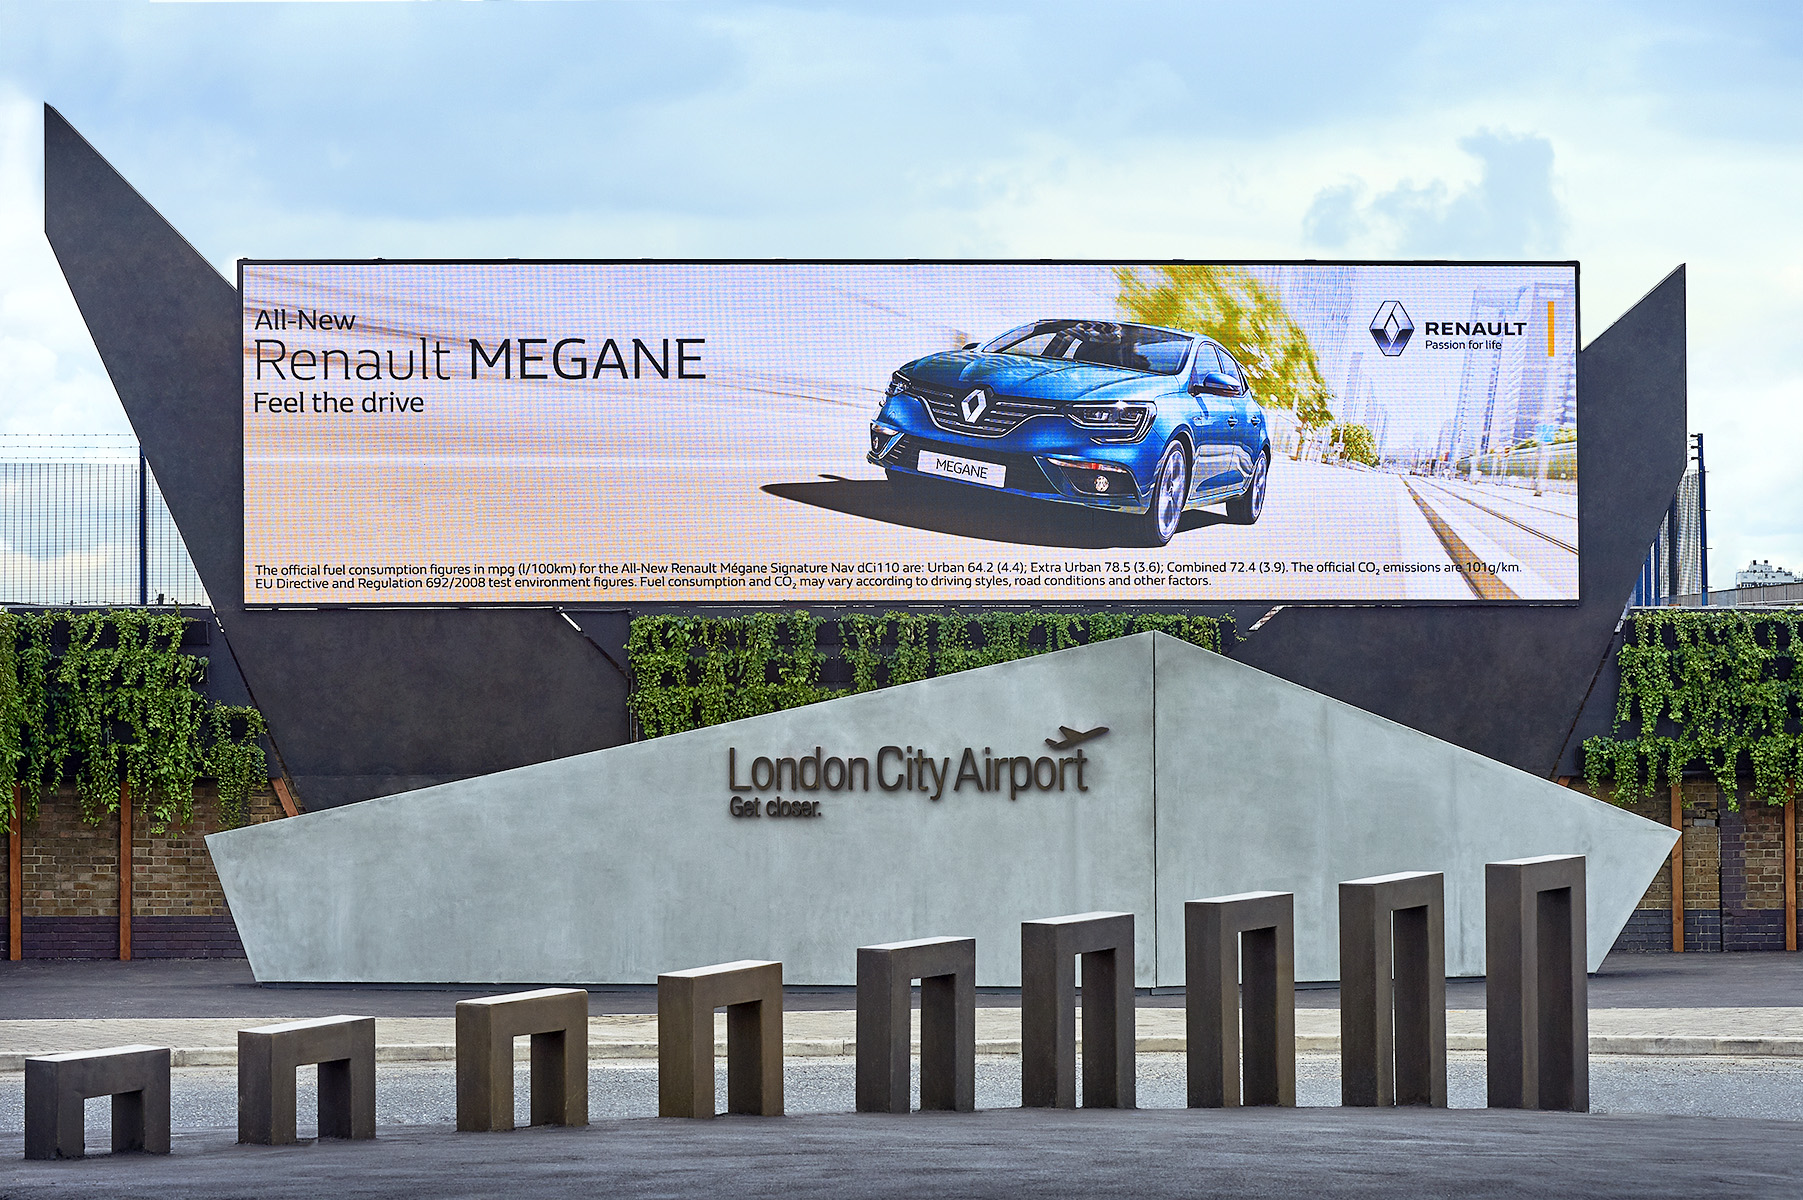 Airport advertising billboard. at London City Airport